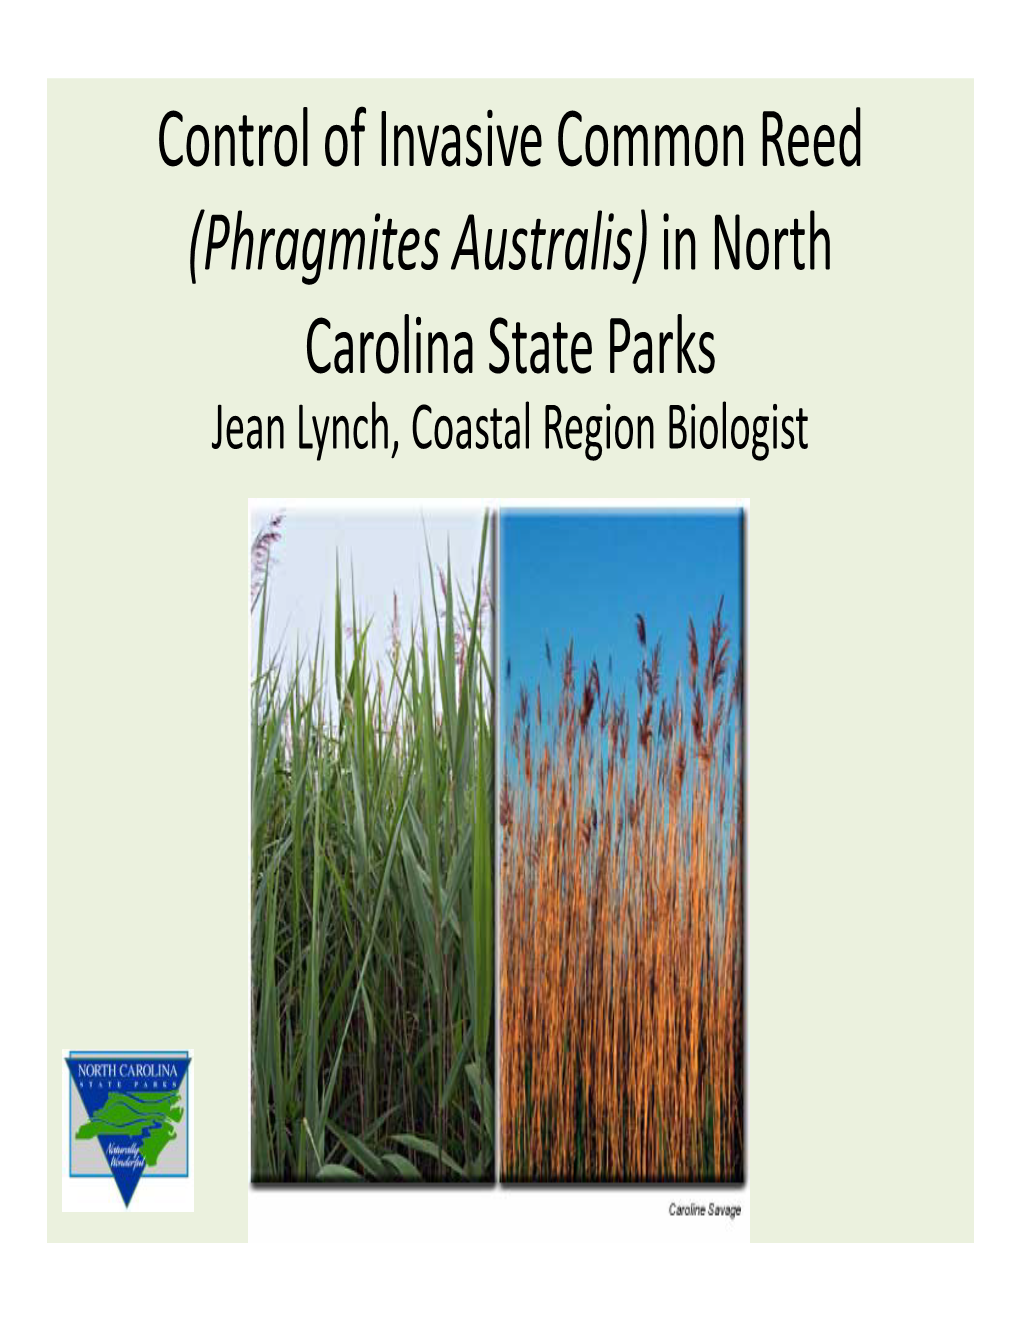 In North Carolina State Parks Jean Lynch, Coastal Region Biologist Eight NC DPR Parks Working on Phragmites Australis Control